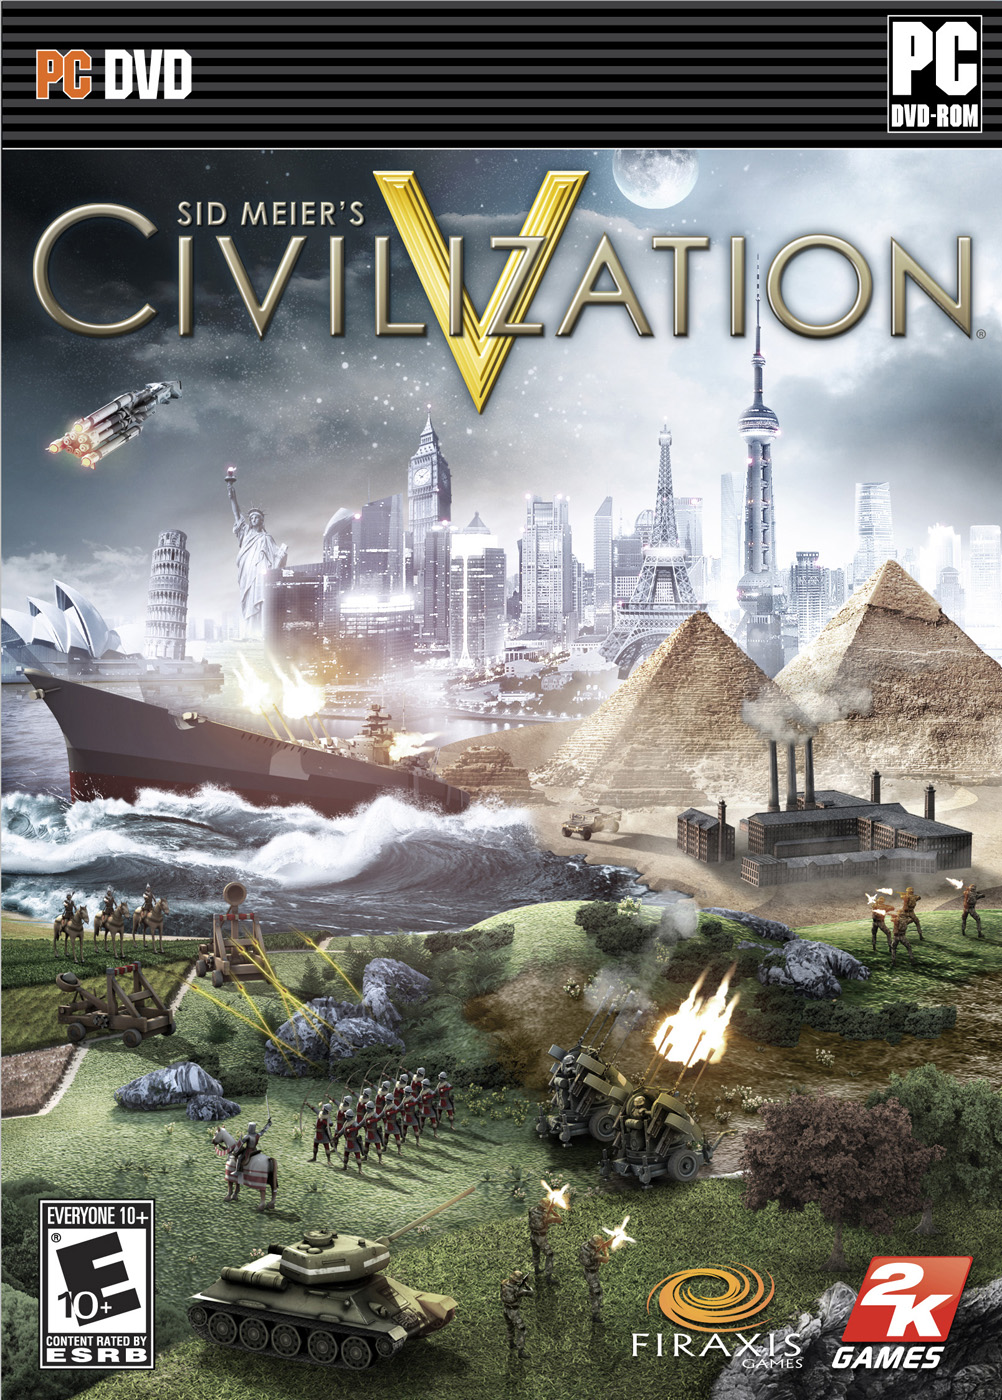 Civilization V guide 1 The basics  GameplayInside